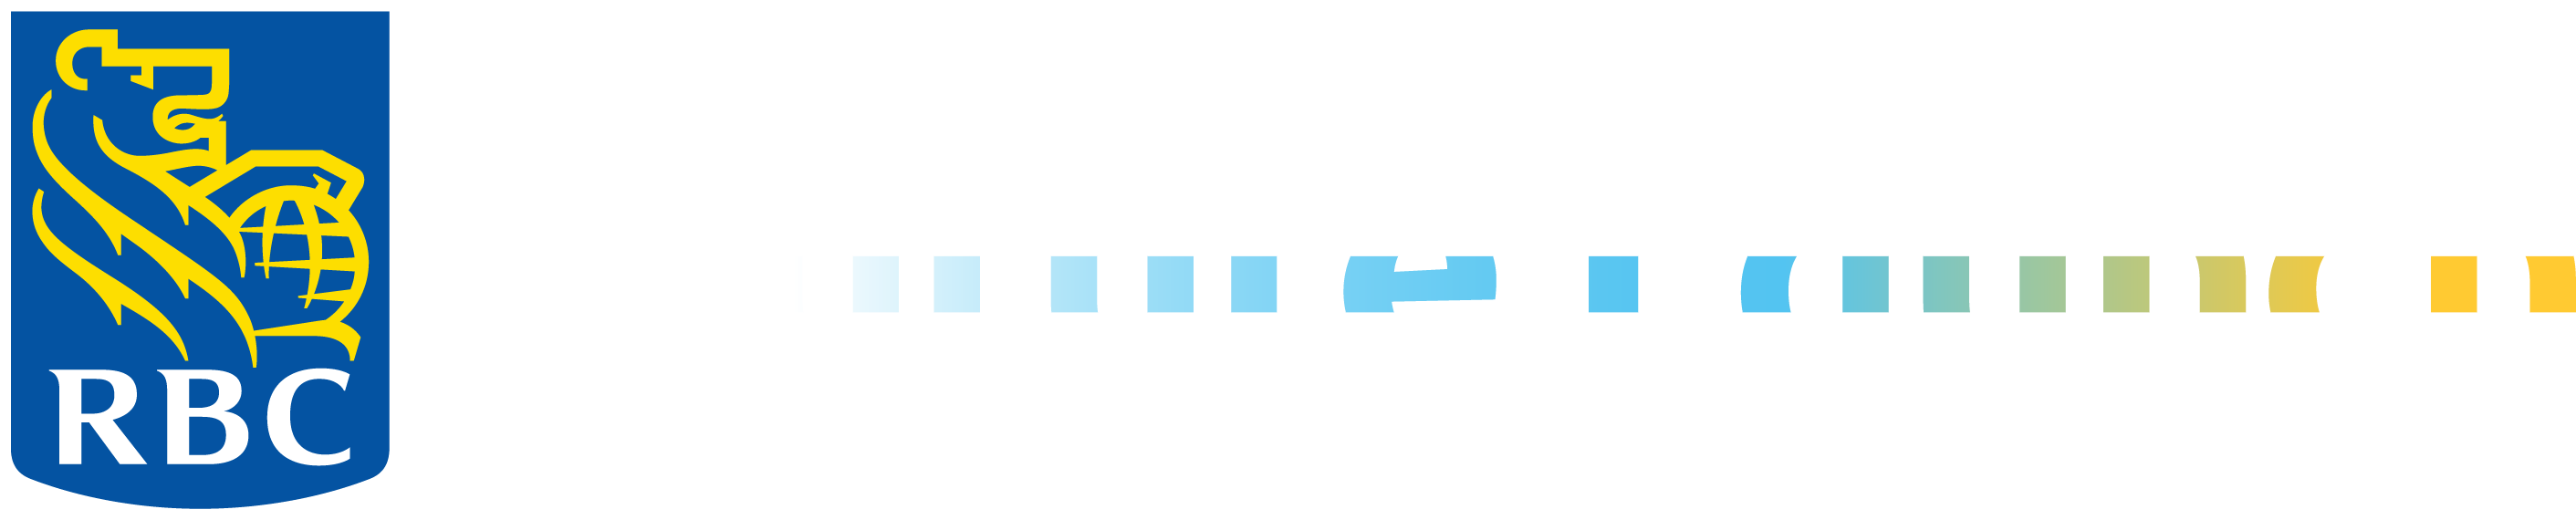 future launch logo